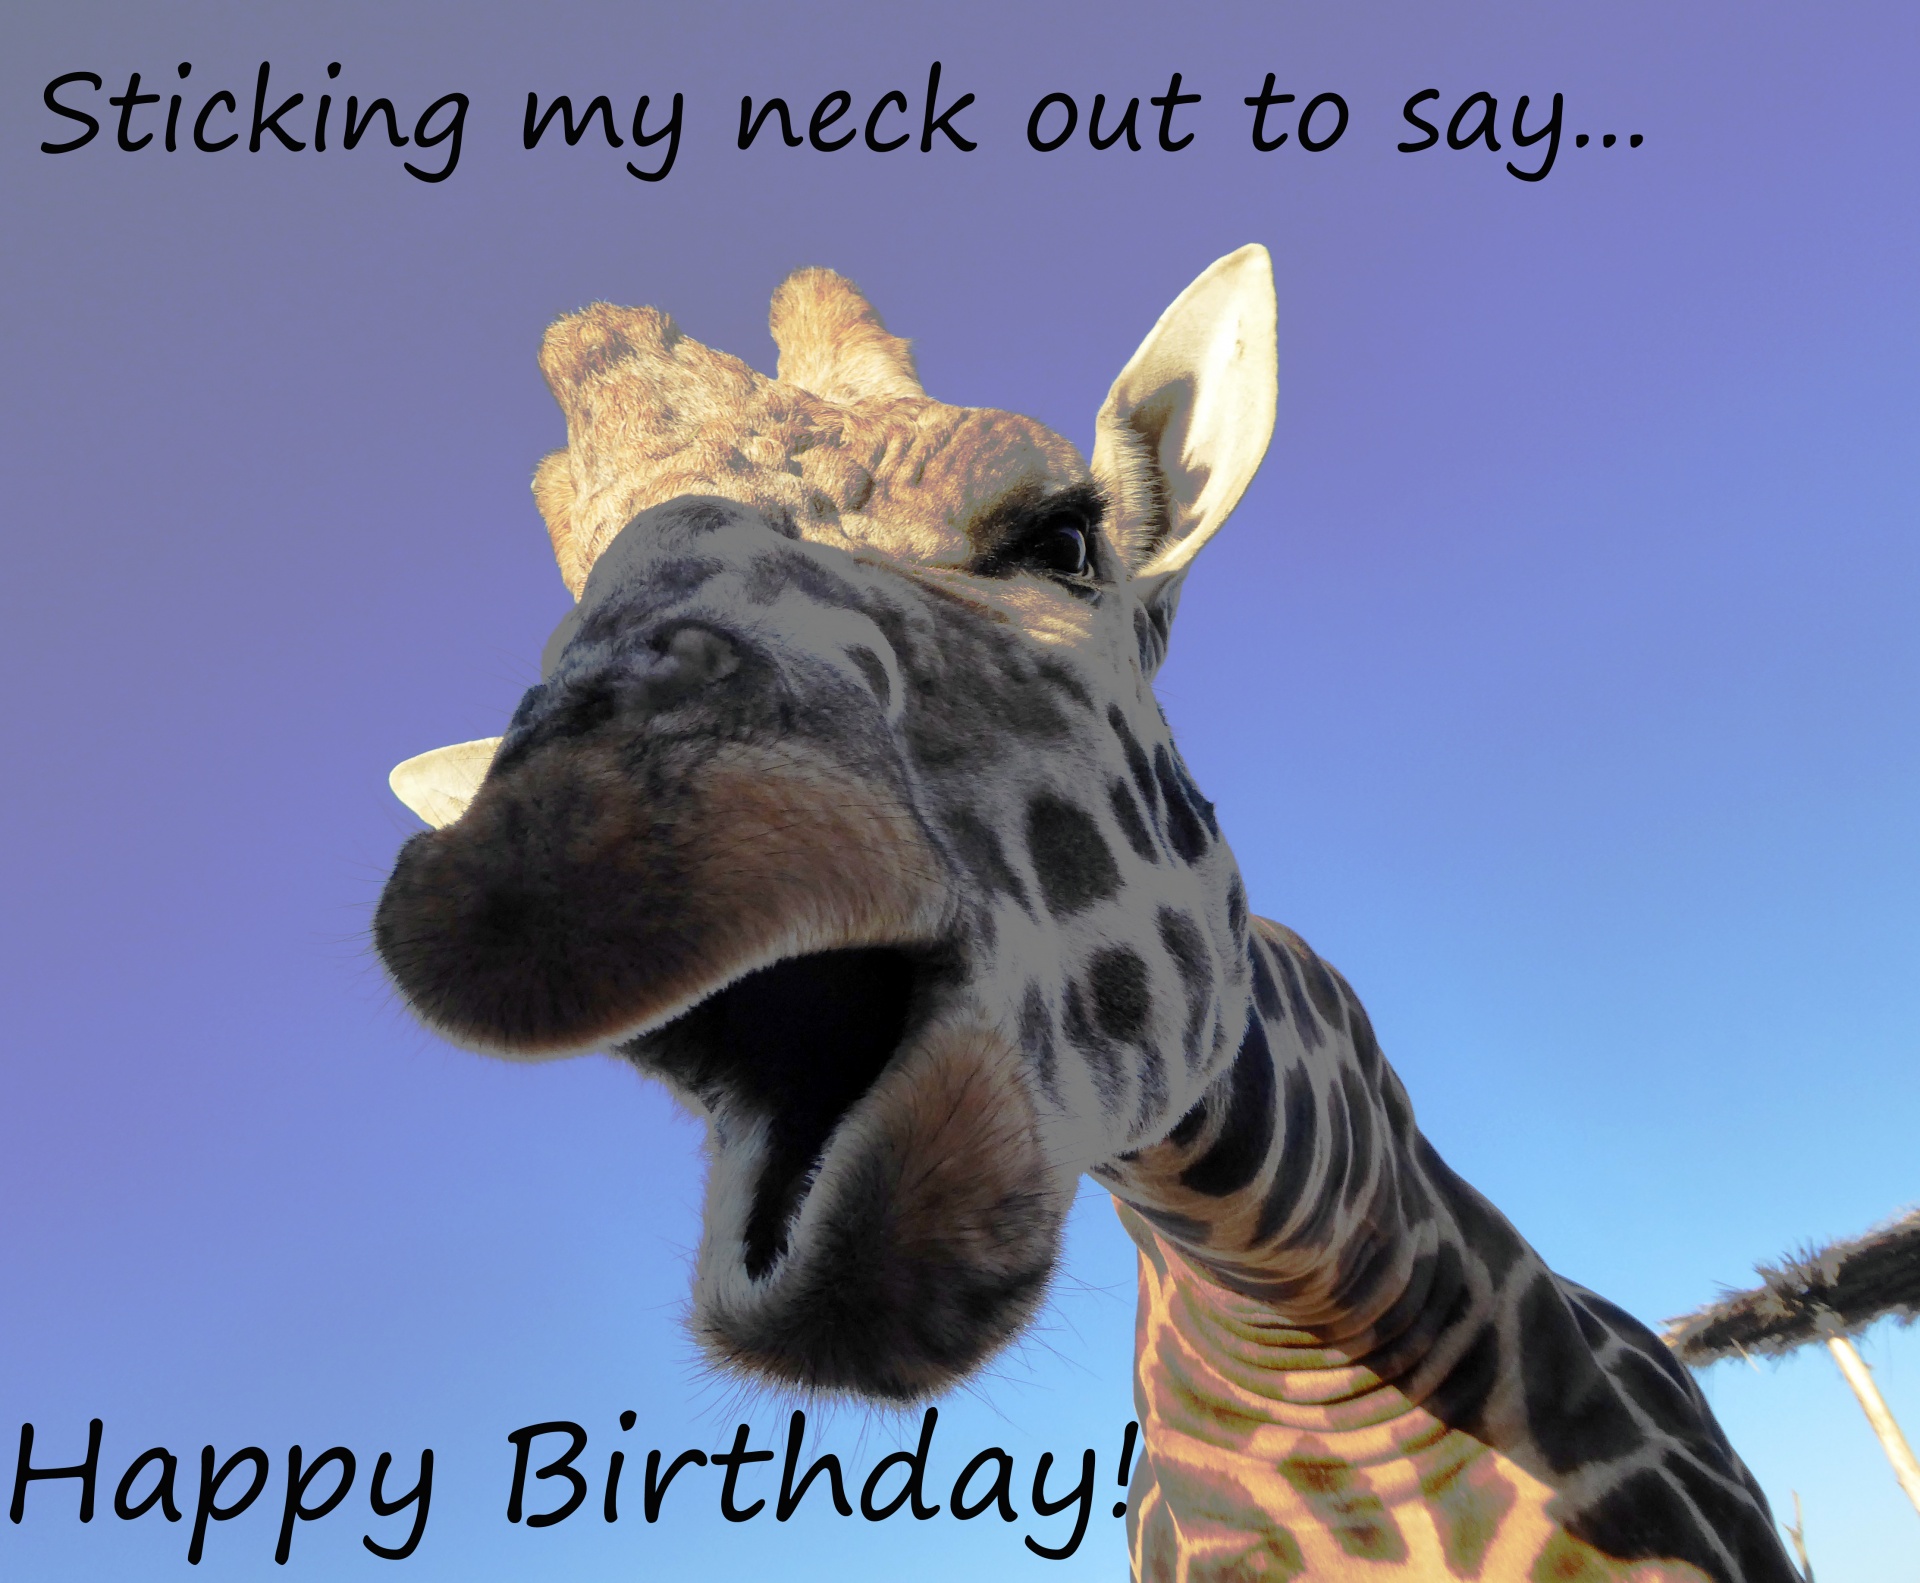 Funny giraffe greetings for a happy birthday